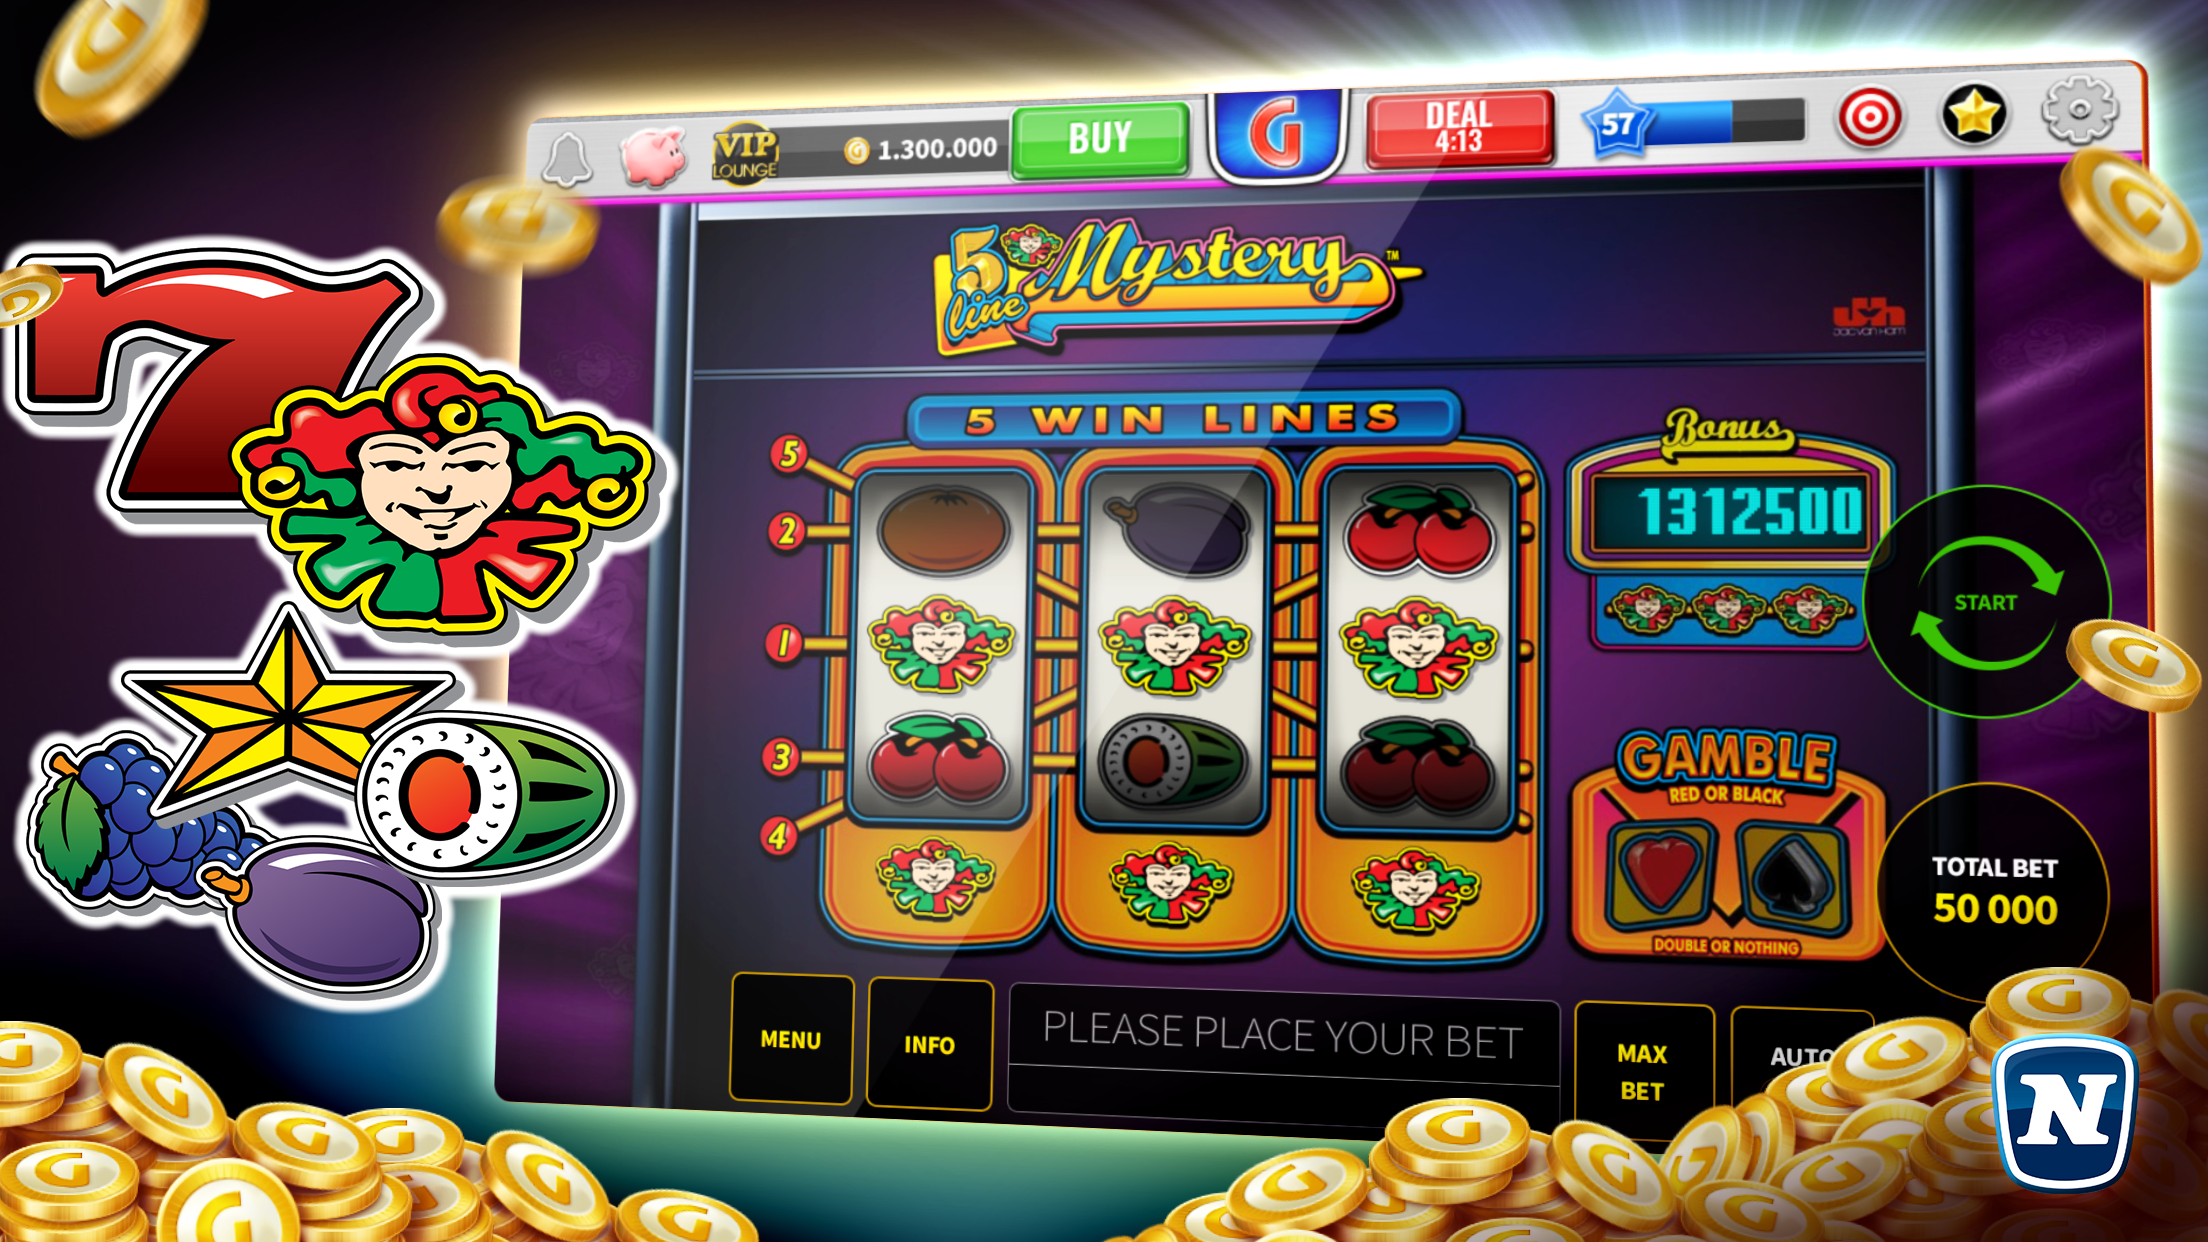 Android application Gaminator Online Casino Slots screenshort